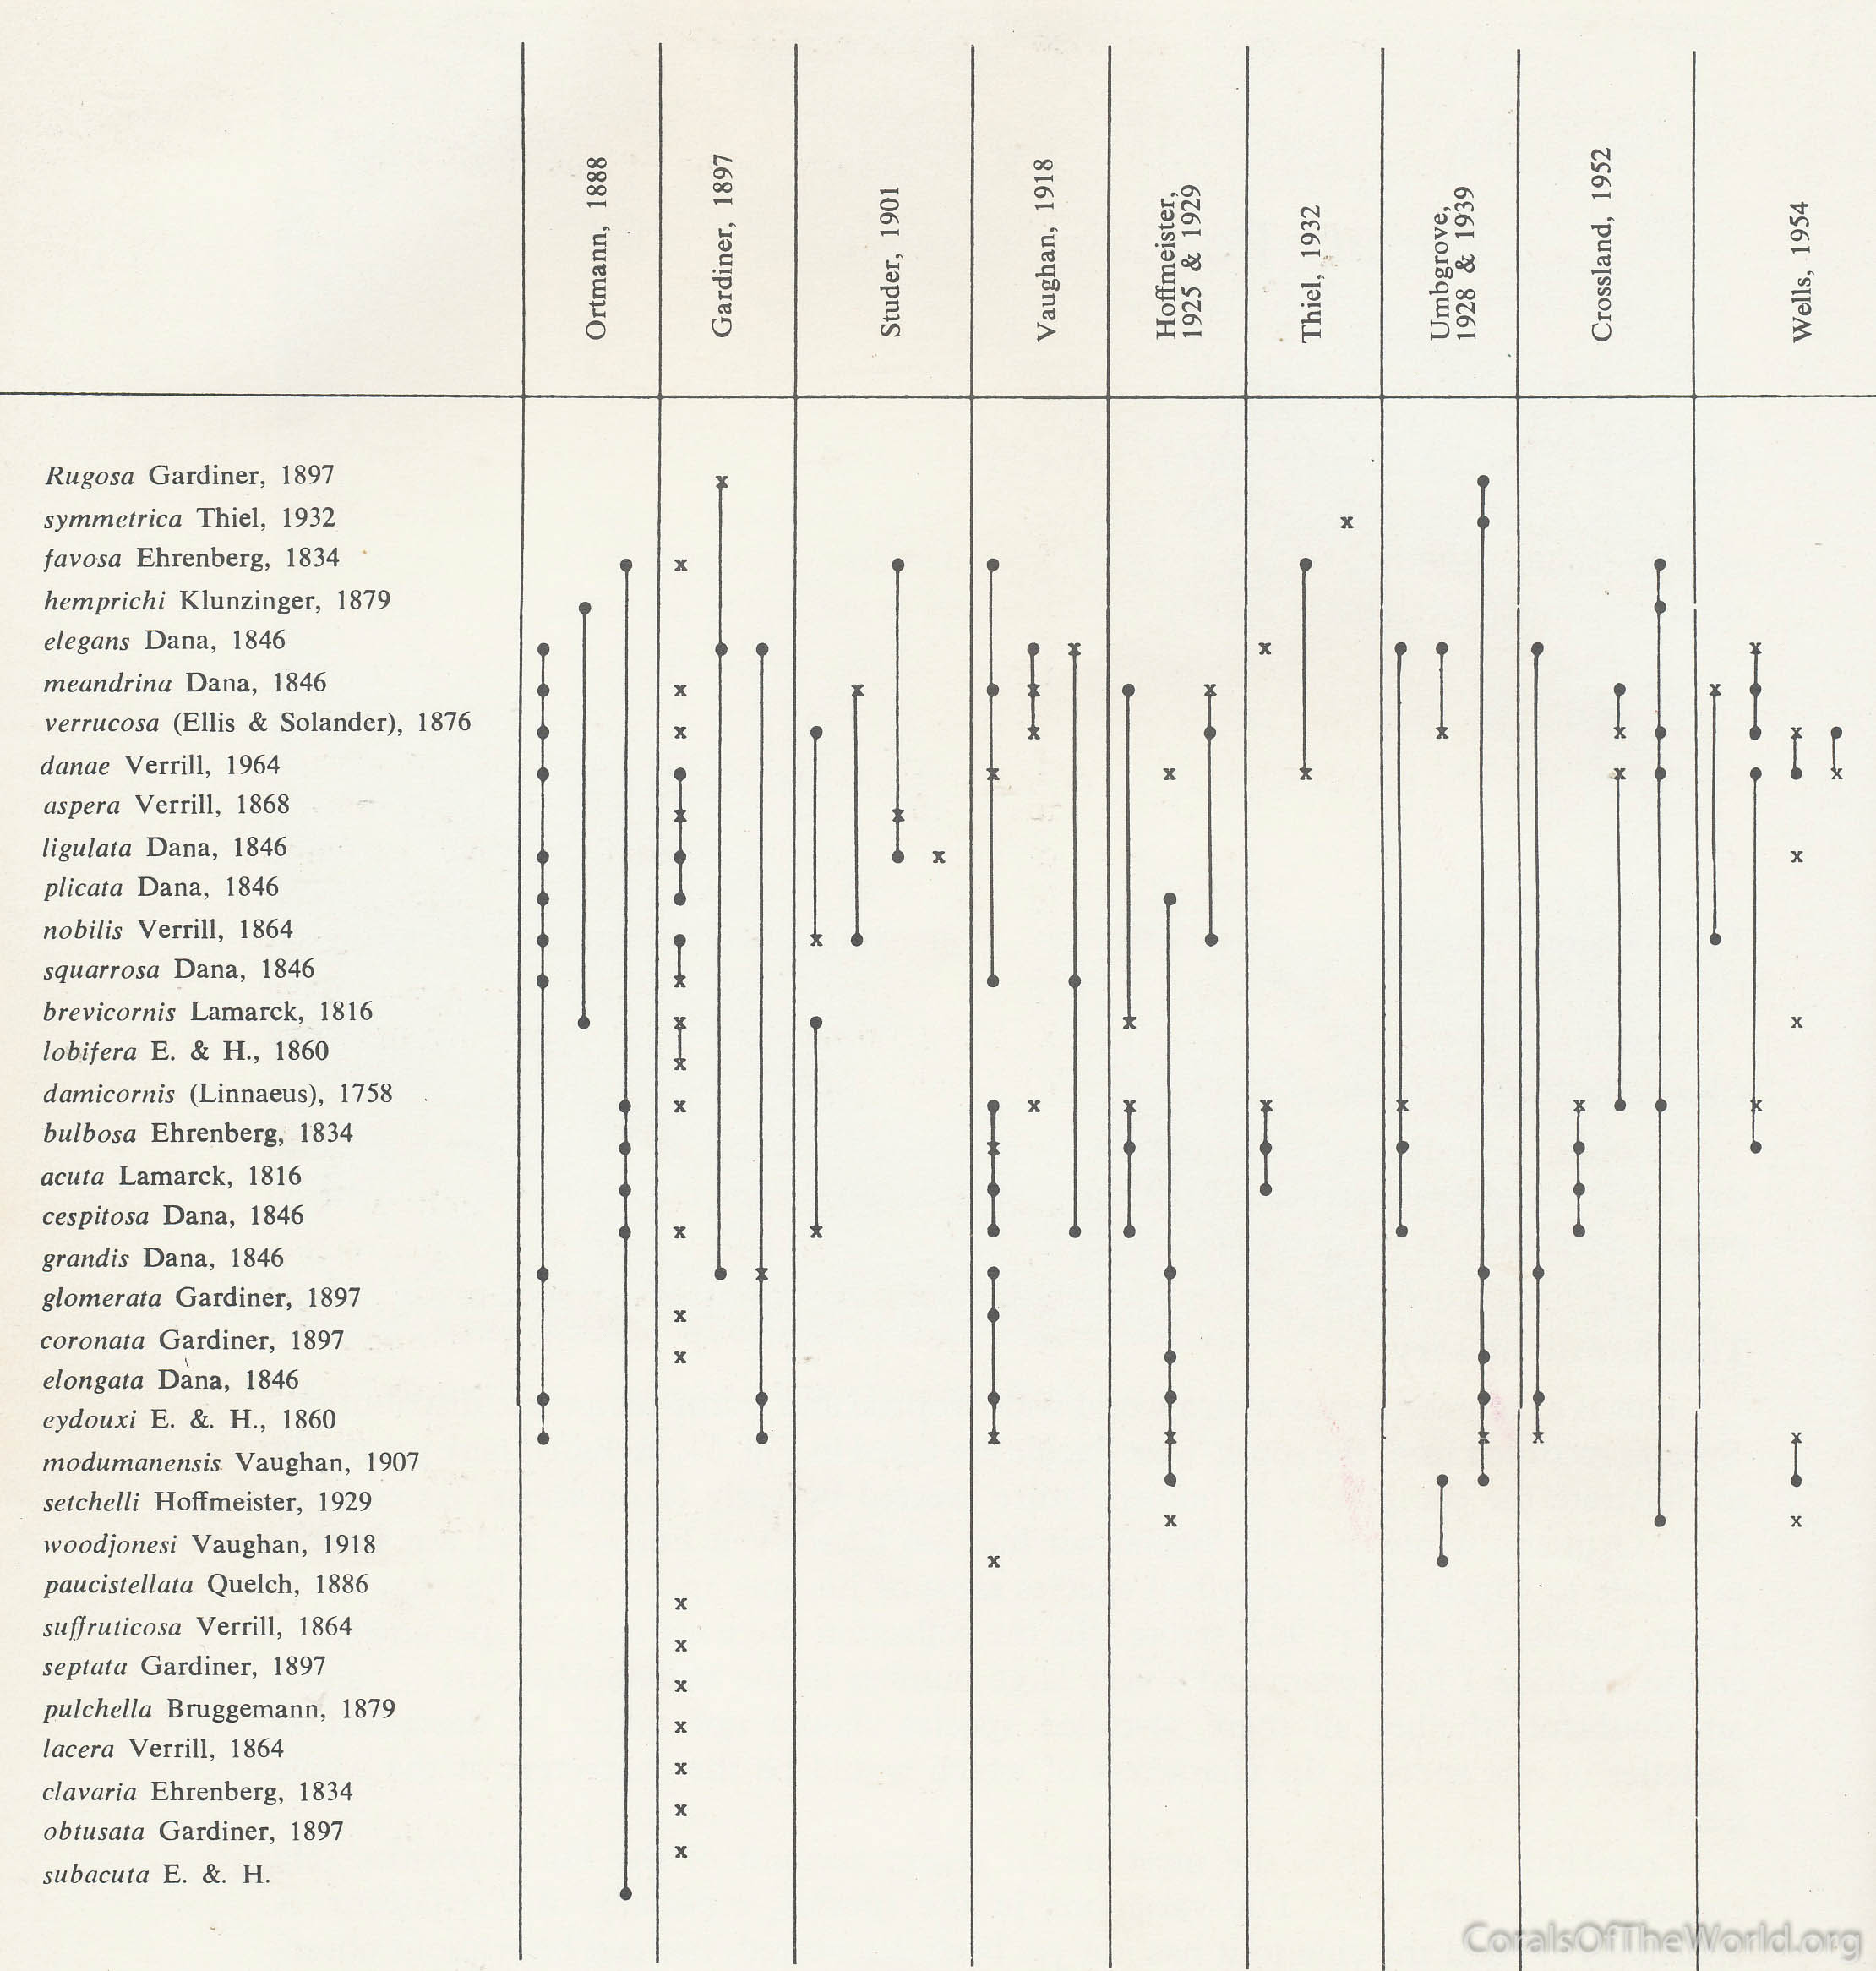 Pocillopora early records